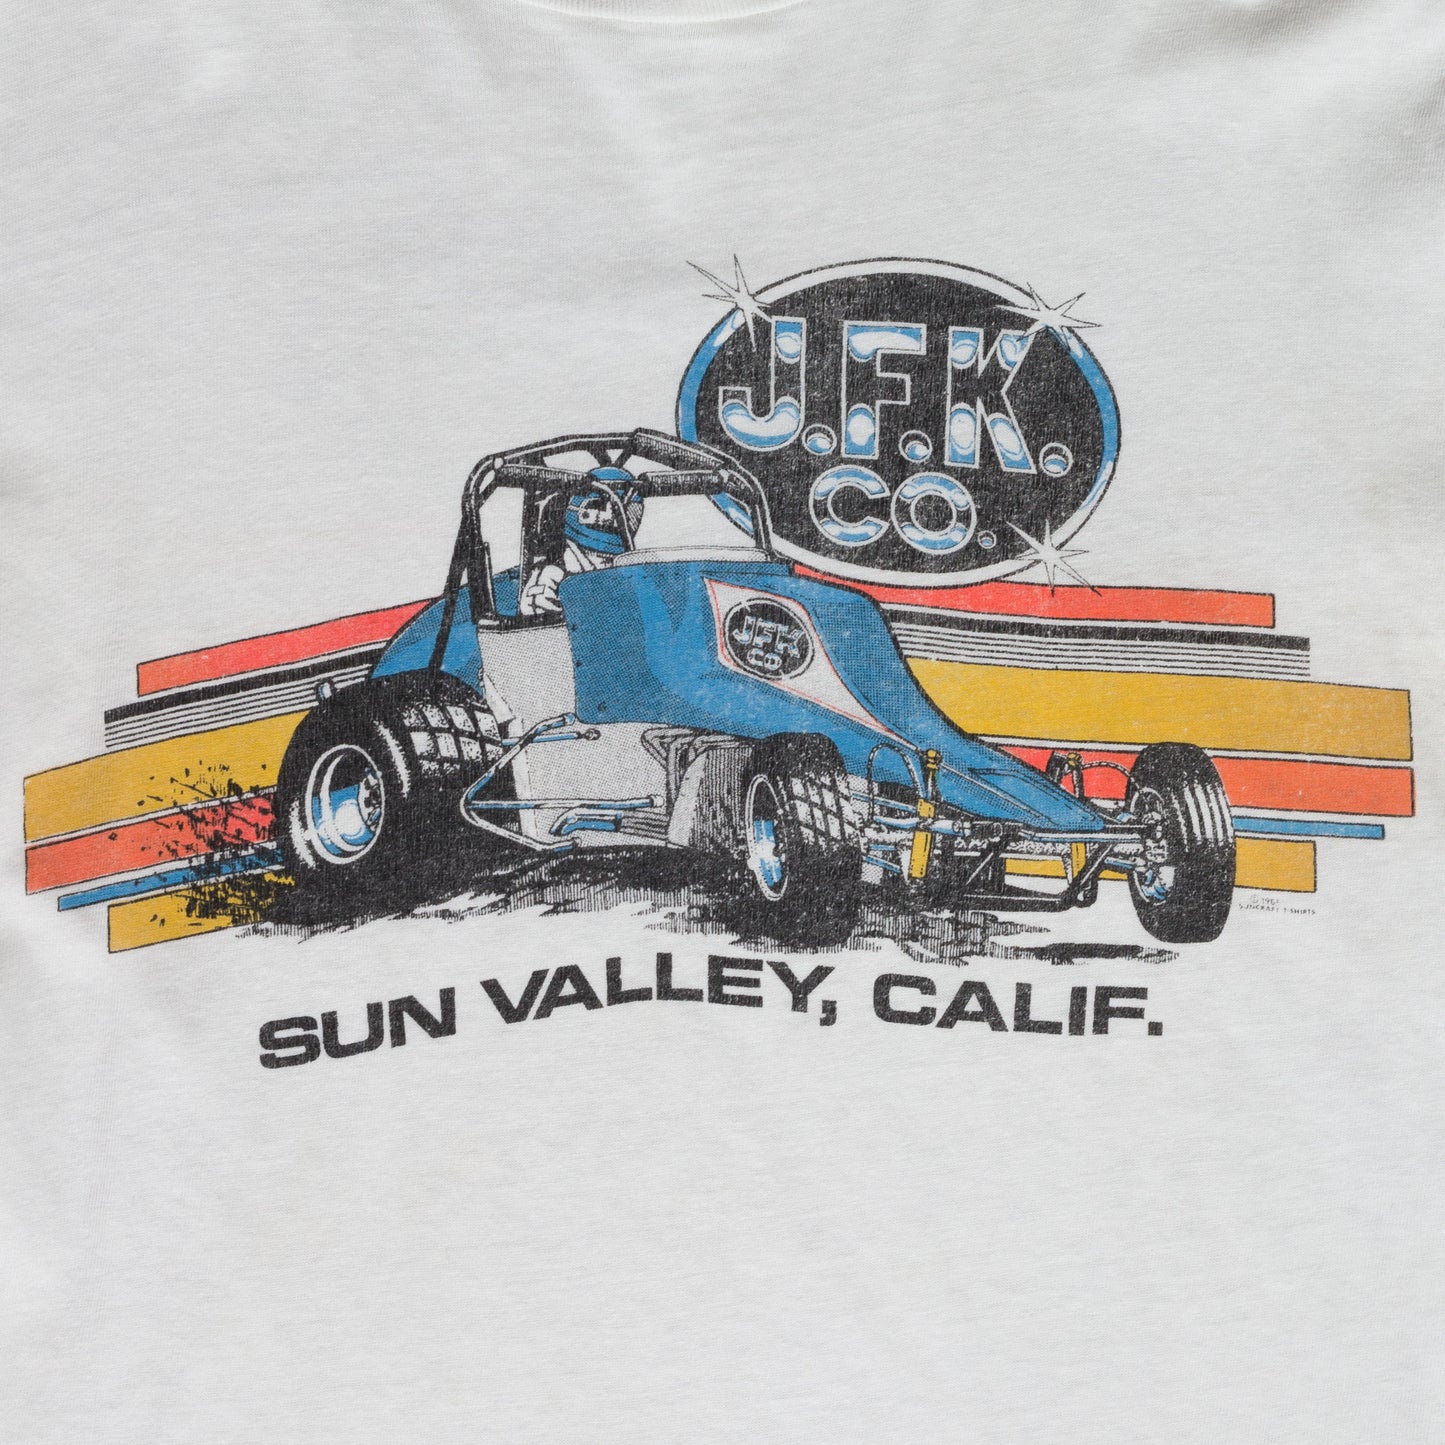 70s 80s JFK Co. Sprint Car Racing T Shirt - Men&#39;s Large, Women&#39;s XL | Vintage Distressed Sun Valley California Graphic Race Car Tee